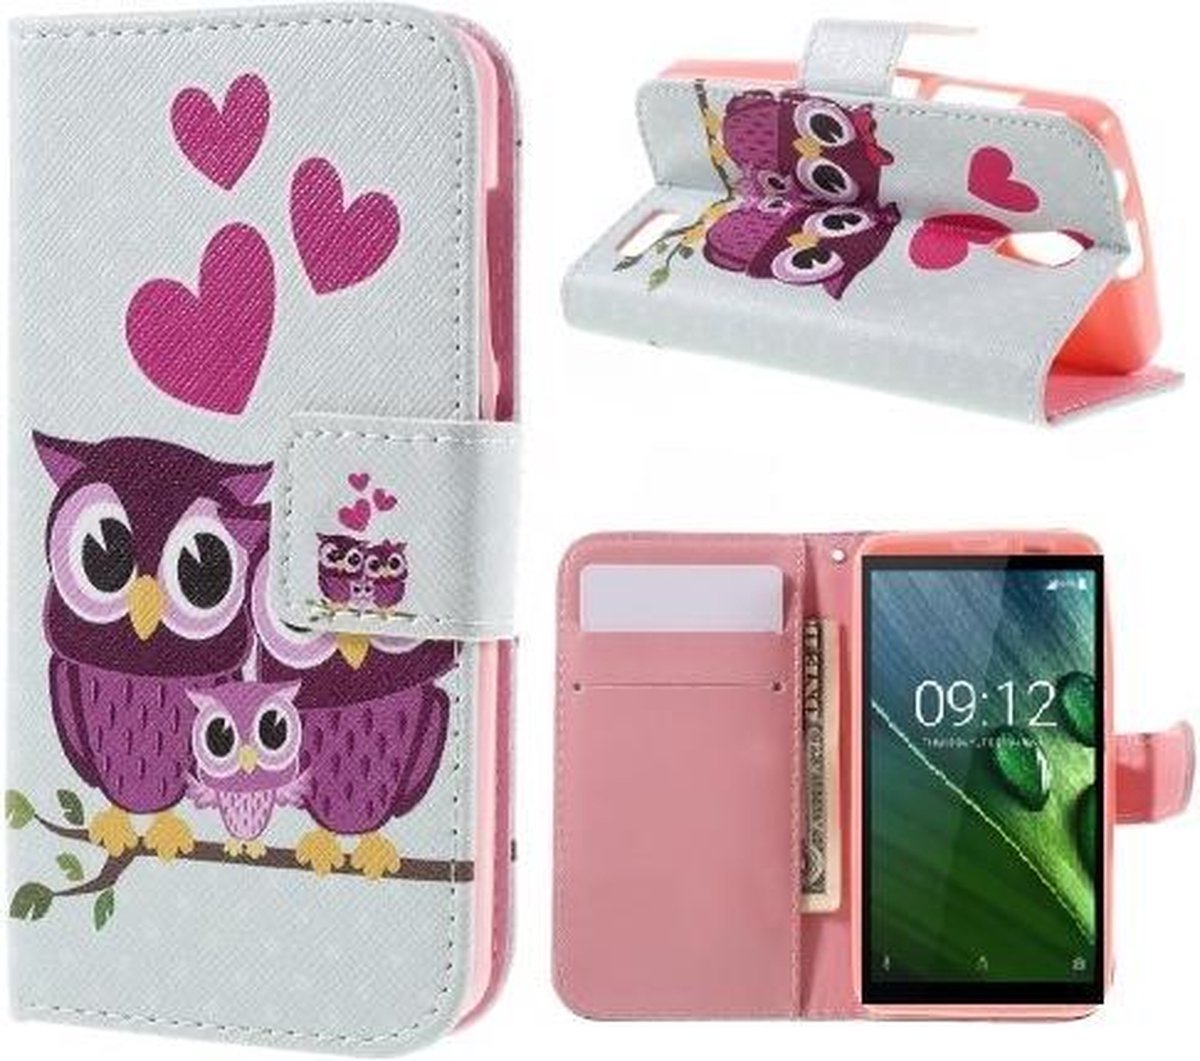 Qissy Sweet Owl Family portemonnee case hoesje voor Nokia 3310 2017